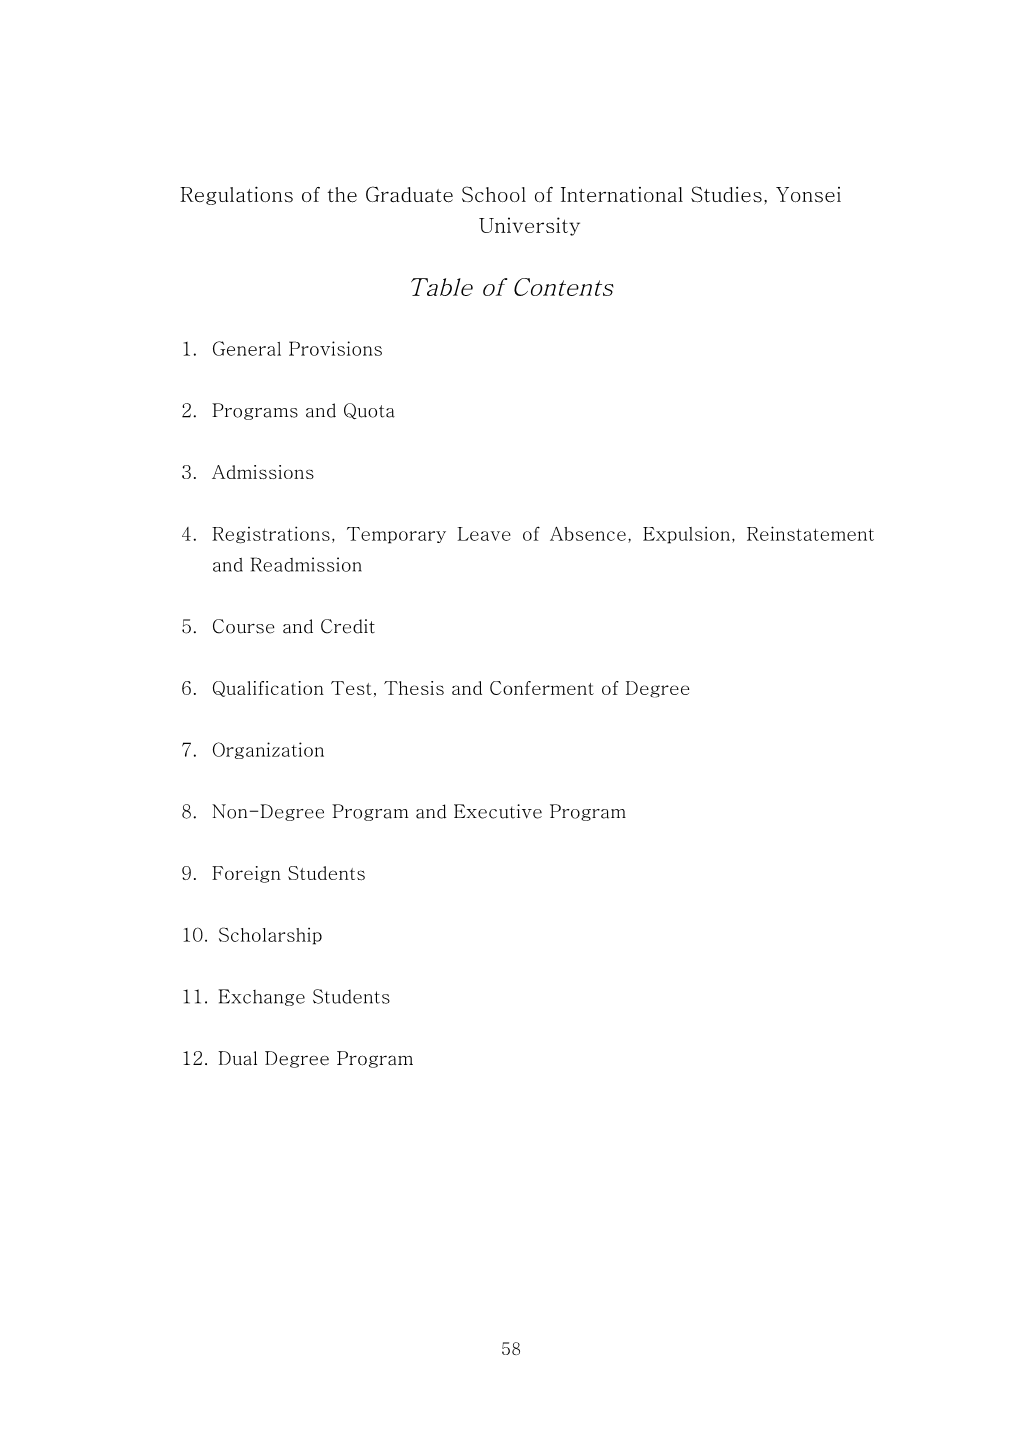 List of Bylaws for Regulations of Graduate School of International Studies